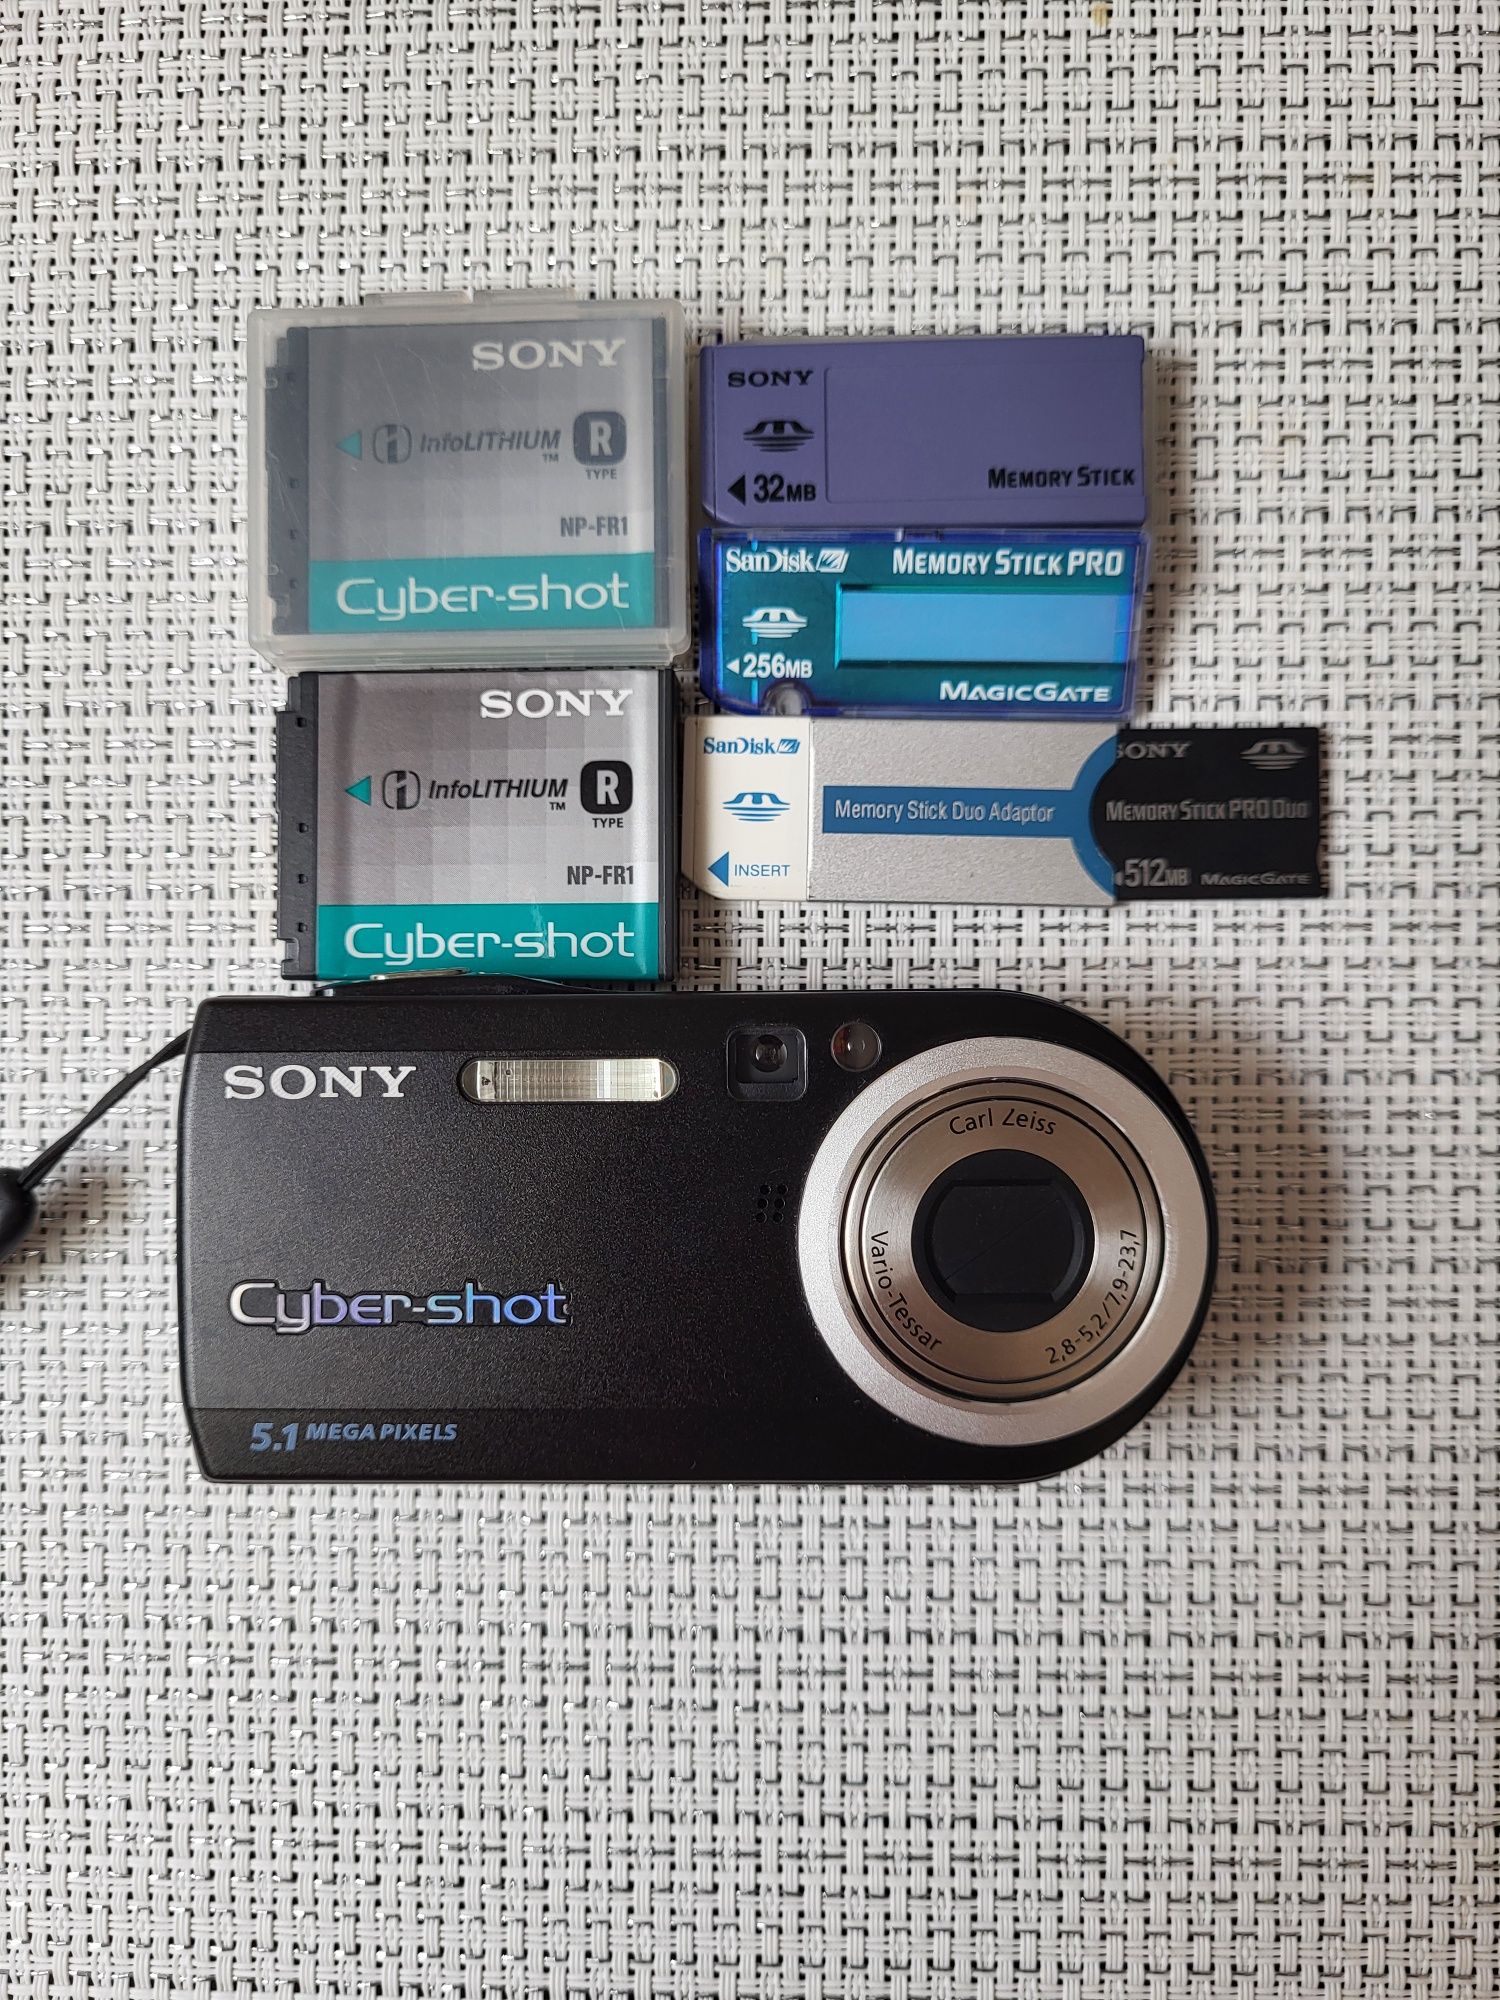 Camera foto Sony Cybershot 5 5.1 megapixels dsc p120, 2 baterii,4 card